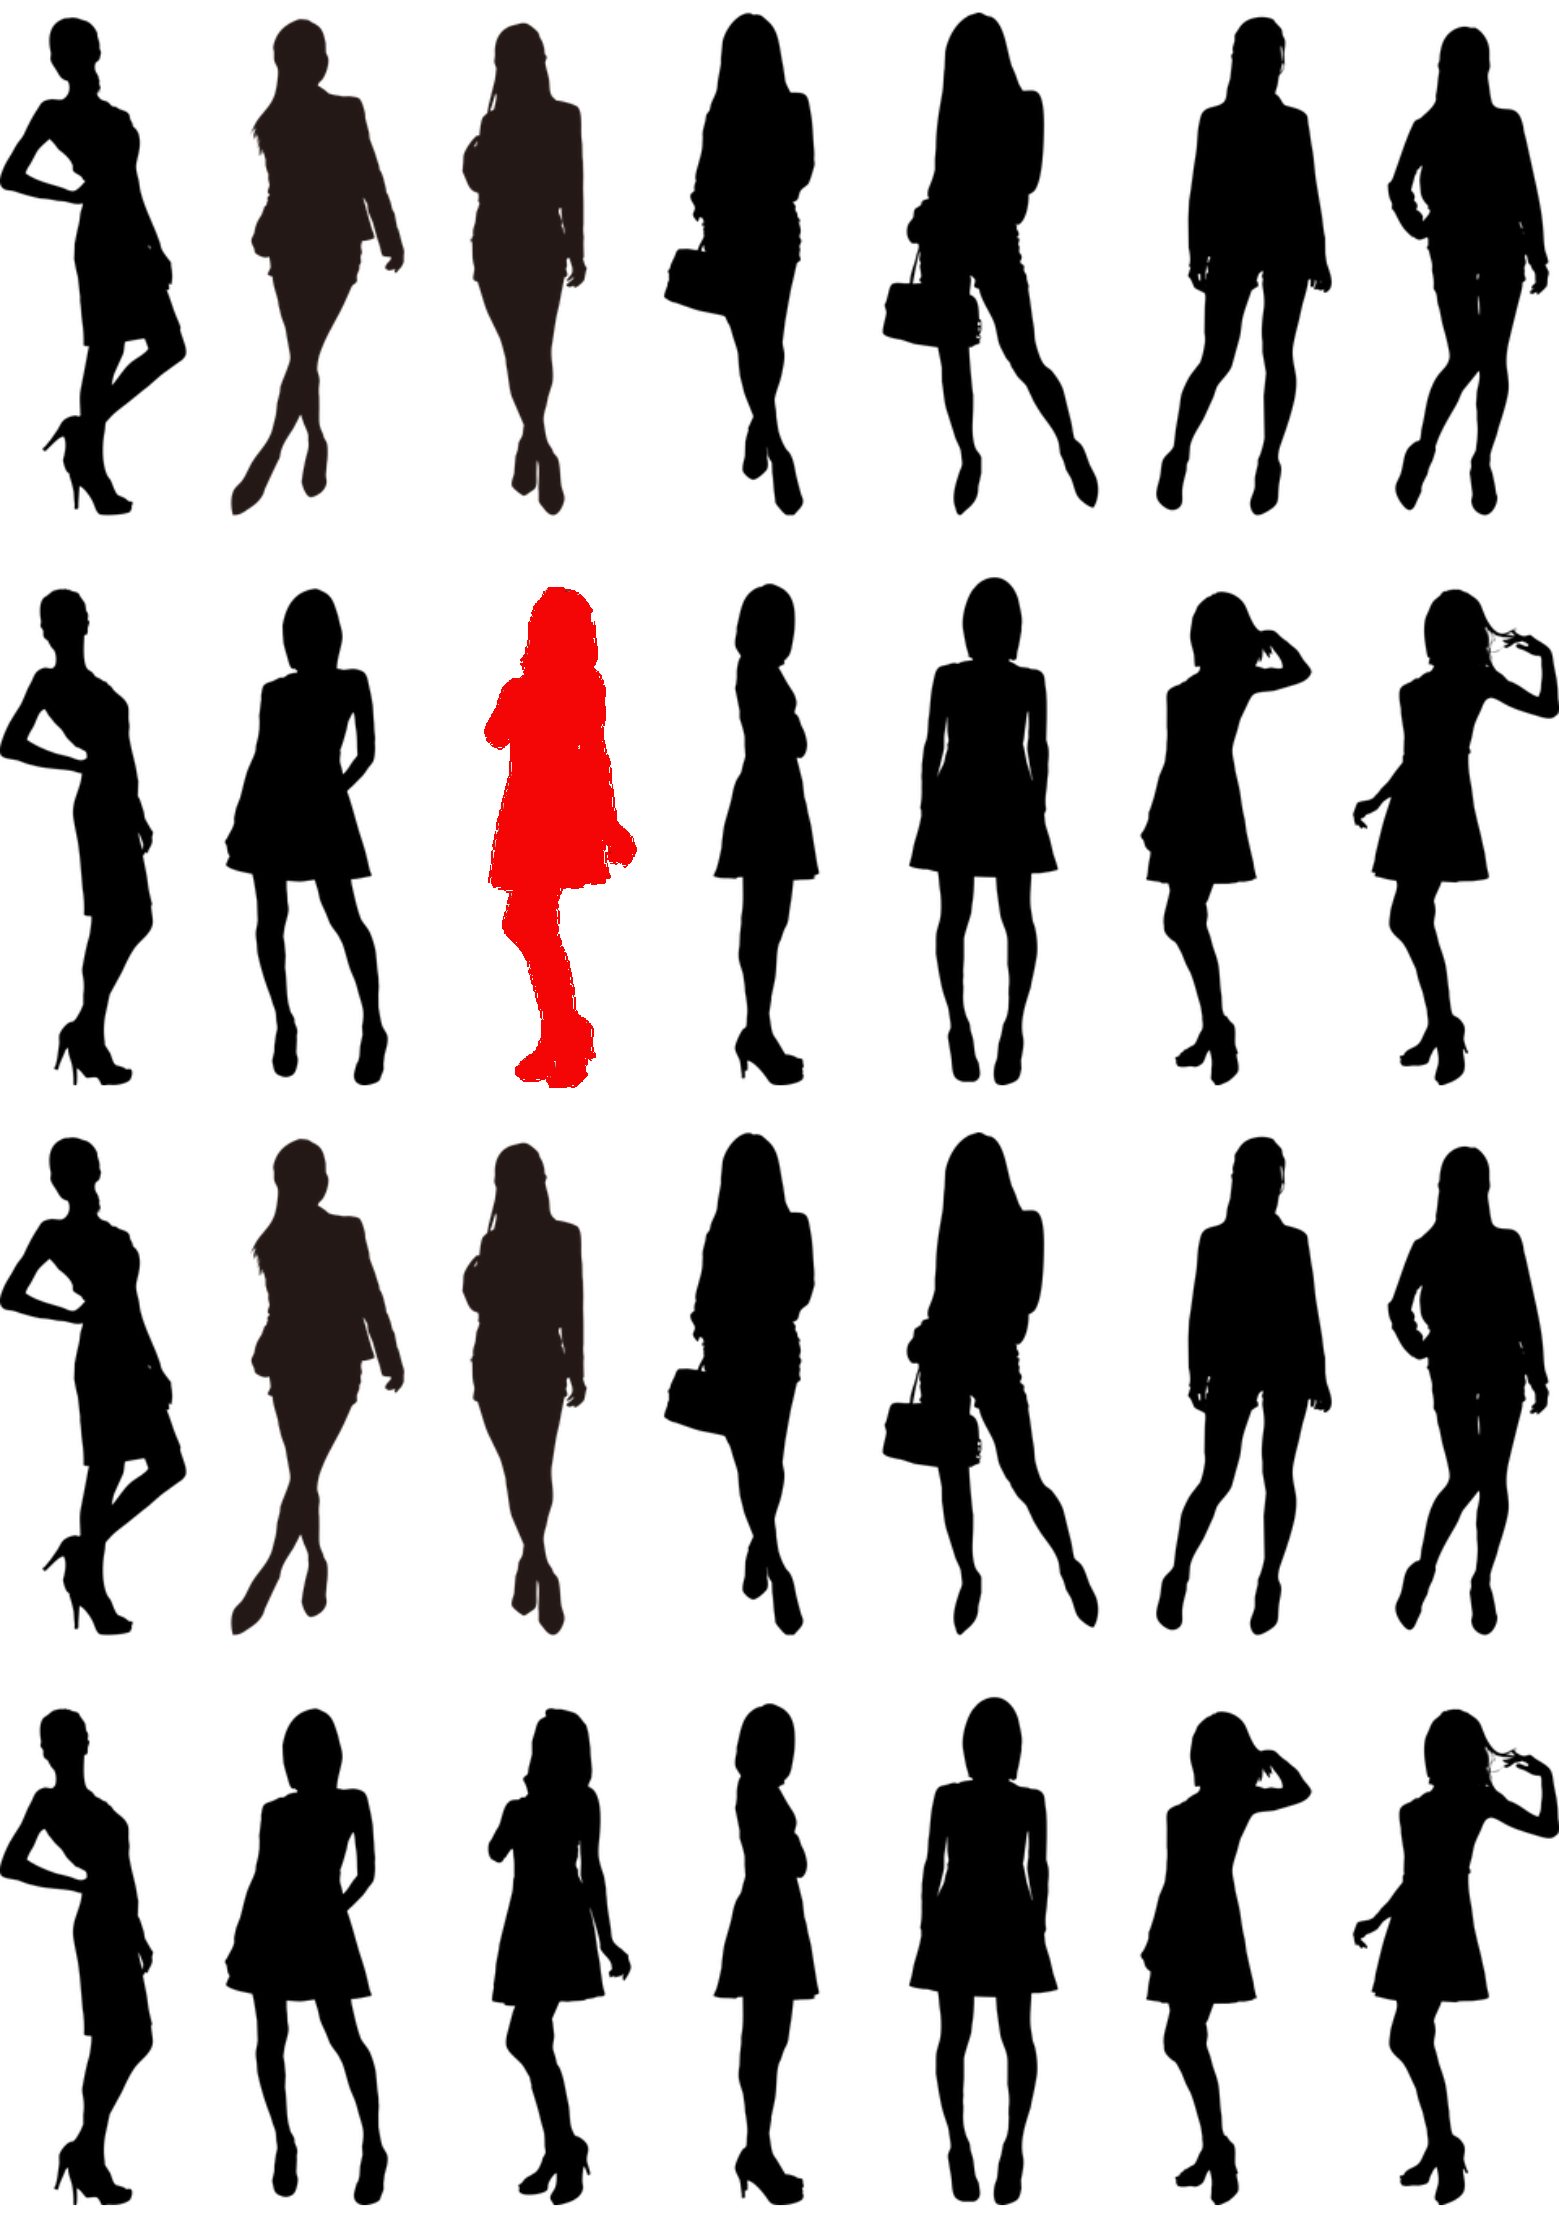 Women's Silhouettes 